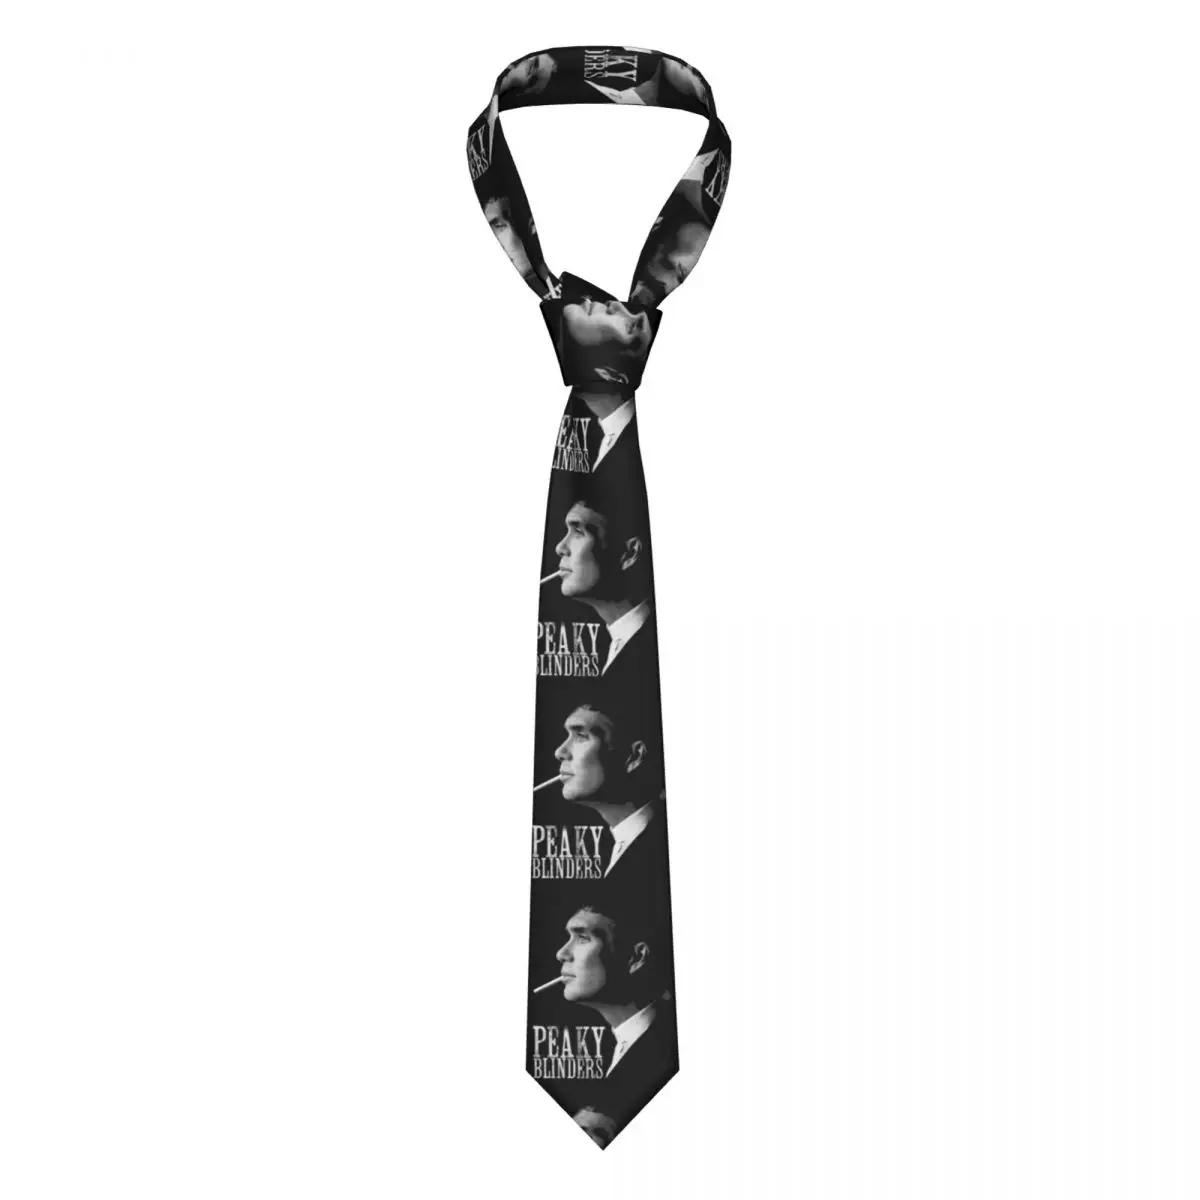 

Peaky Blinders Unisex Necktie Slim 8 cm Narrow Tommy Shelby Neck Tie for Men Daily Wear Cravat Wedding Accessories Cosplay Props